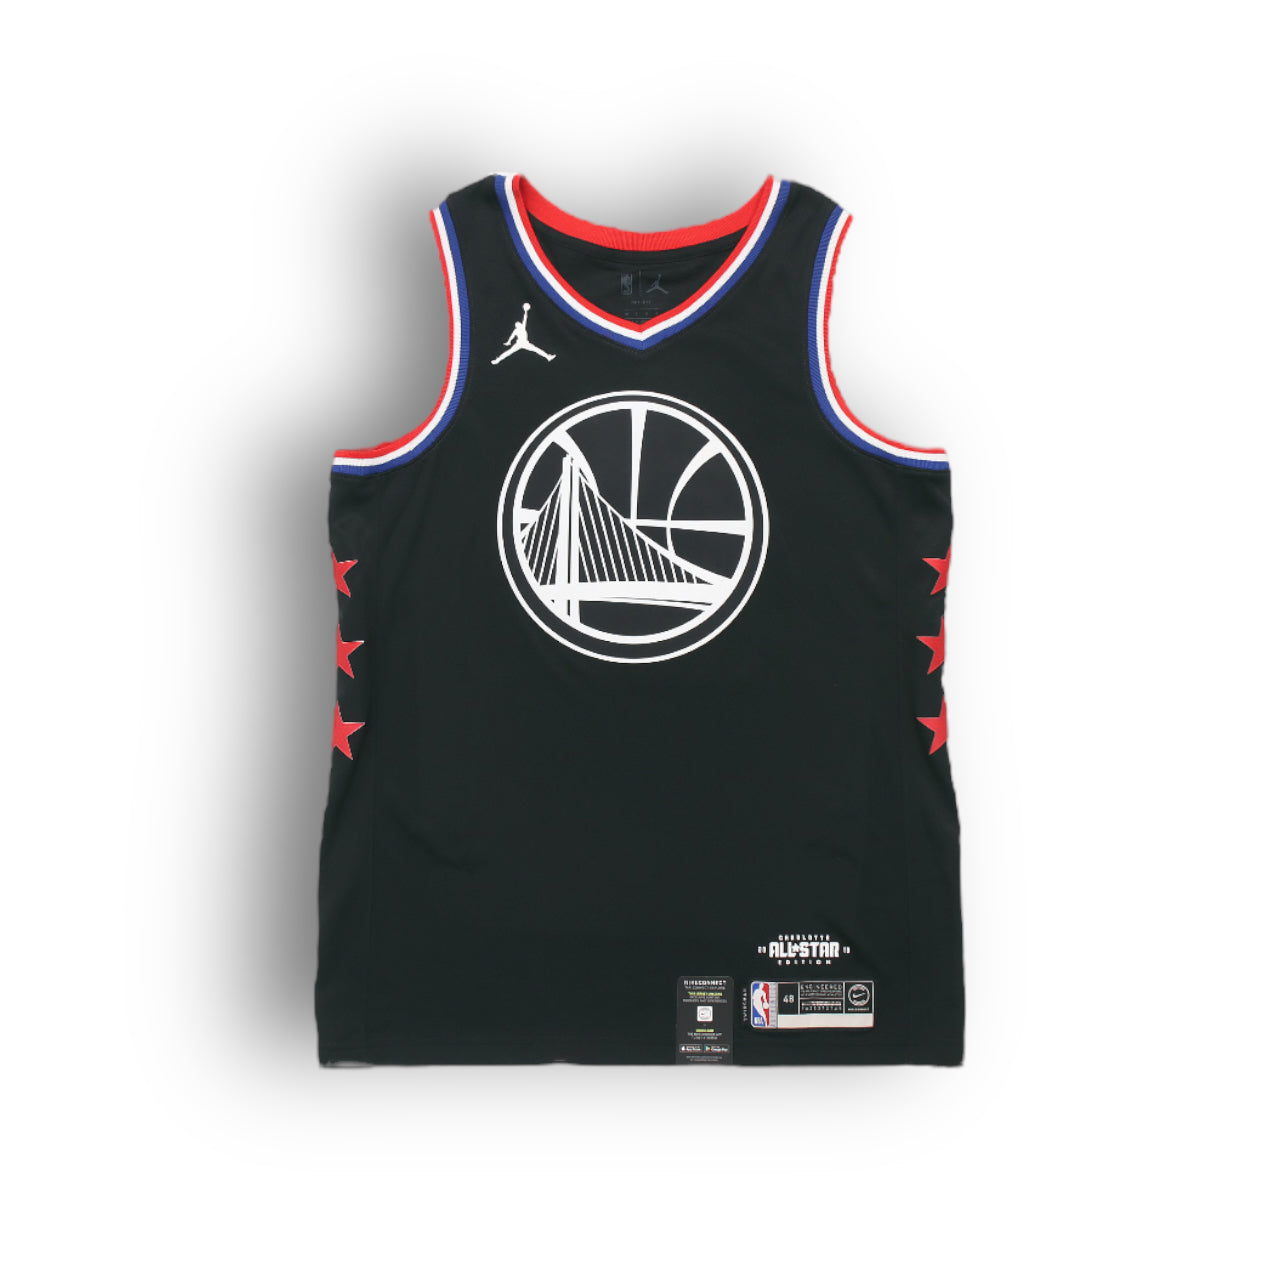 Stephen Curry 2019 All-Star Game Nike Swingman Jersey - Black